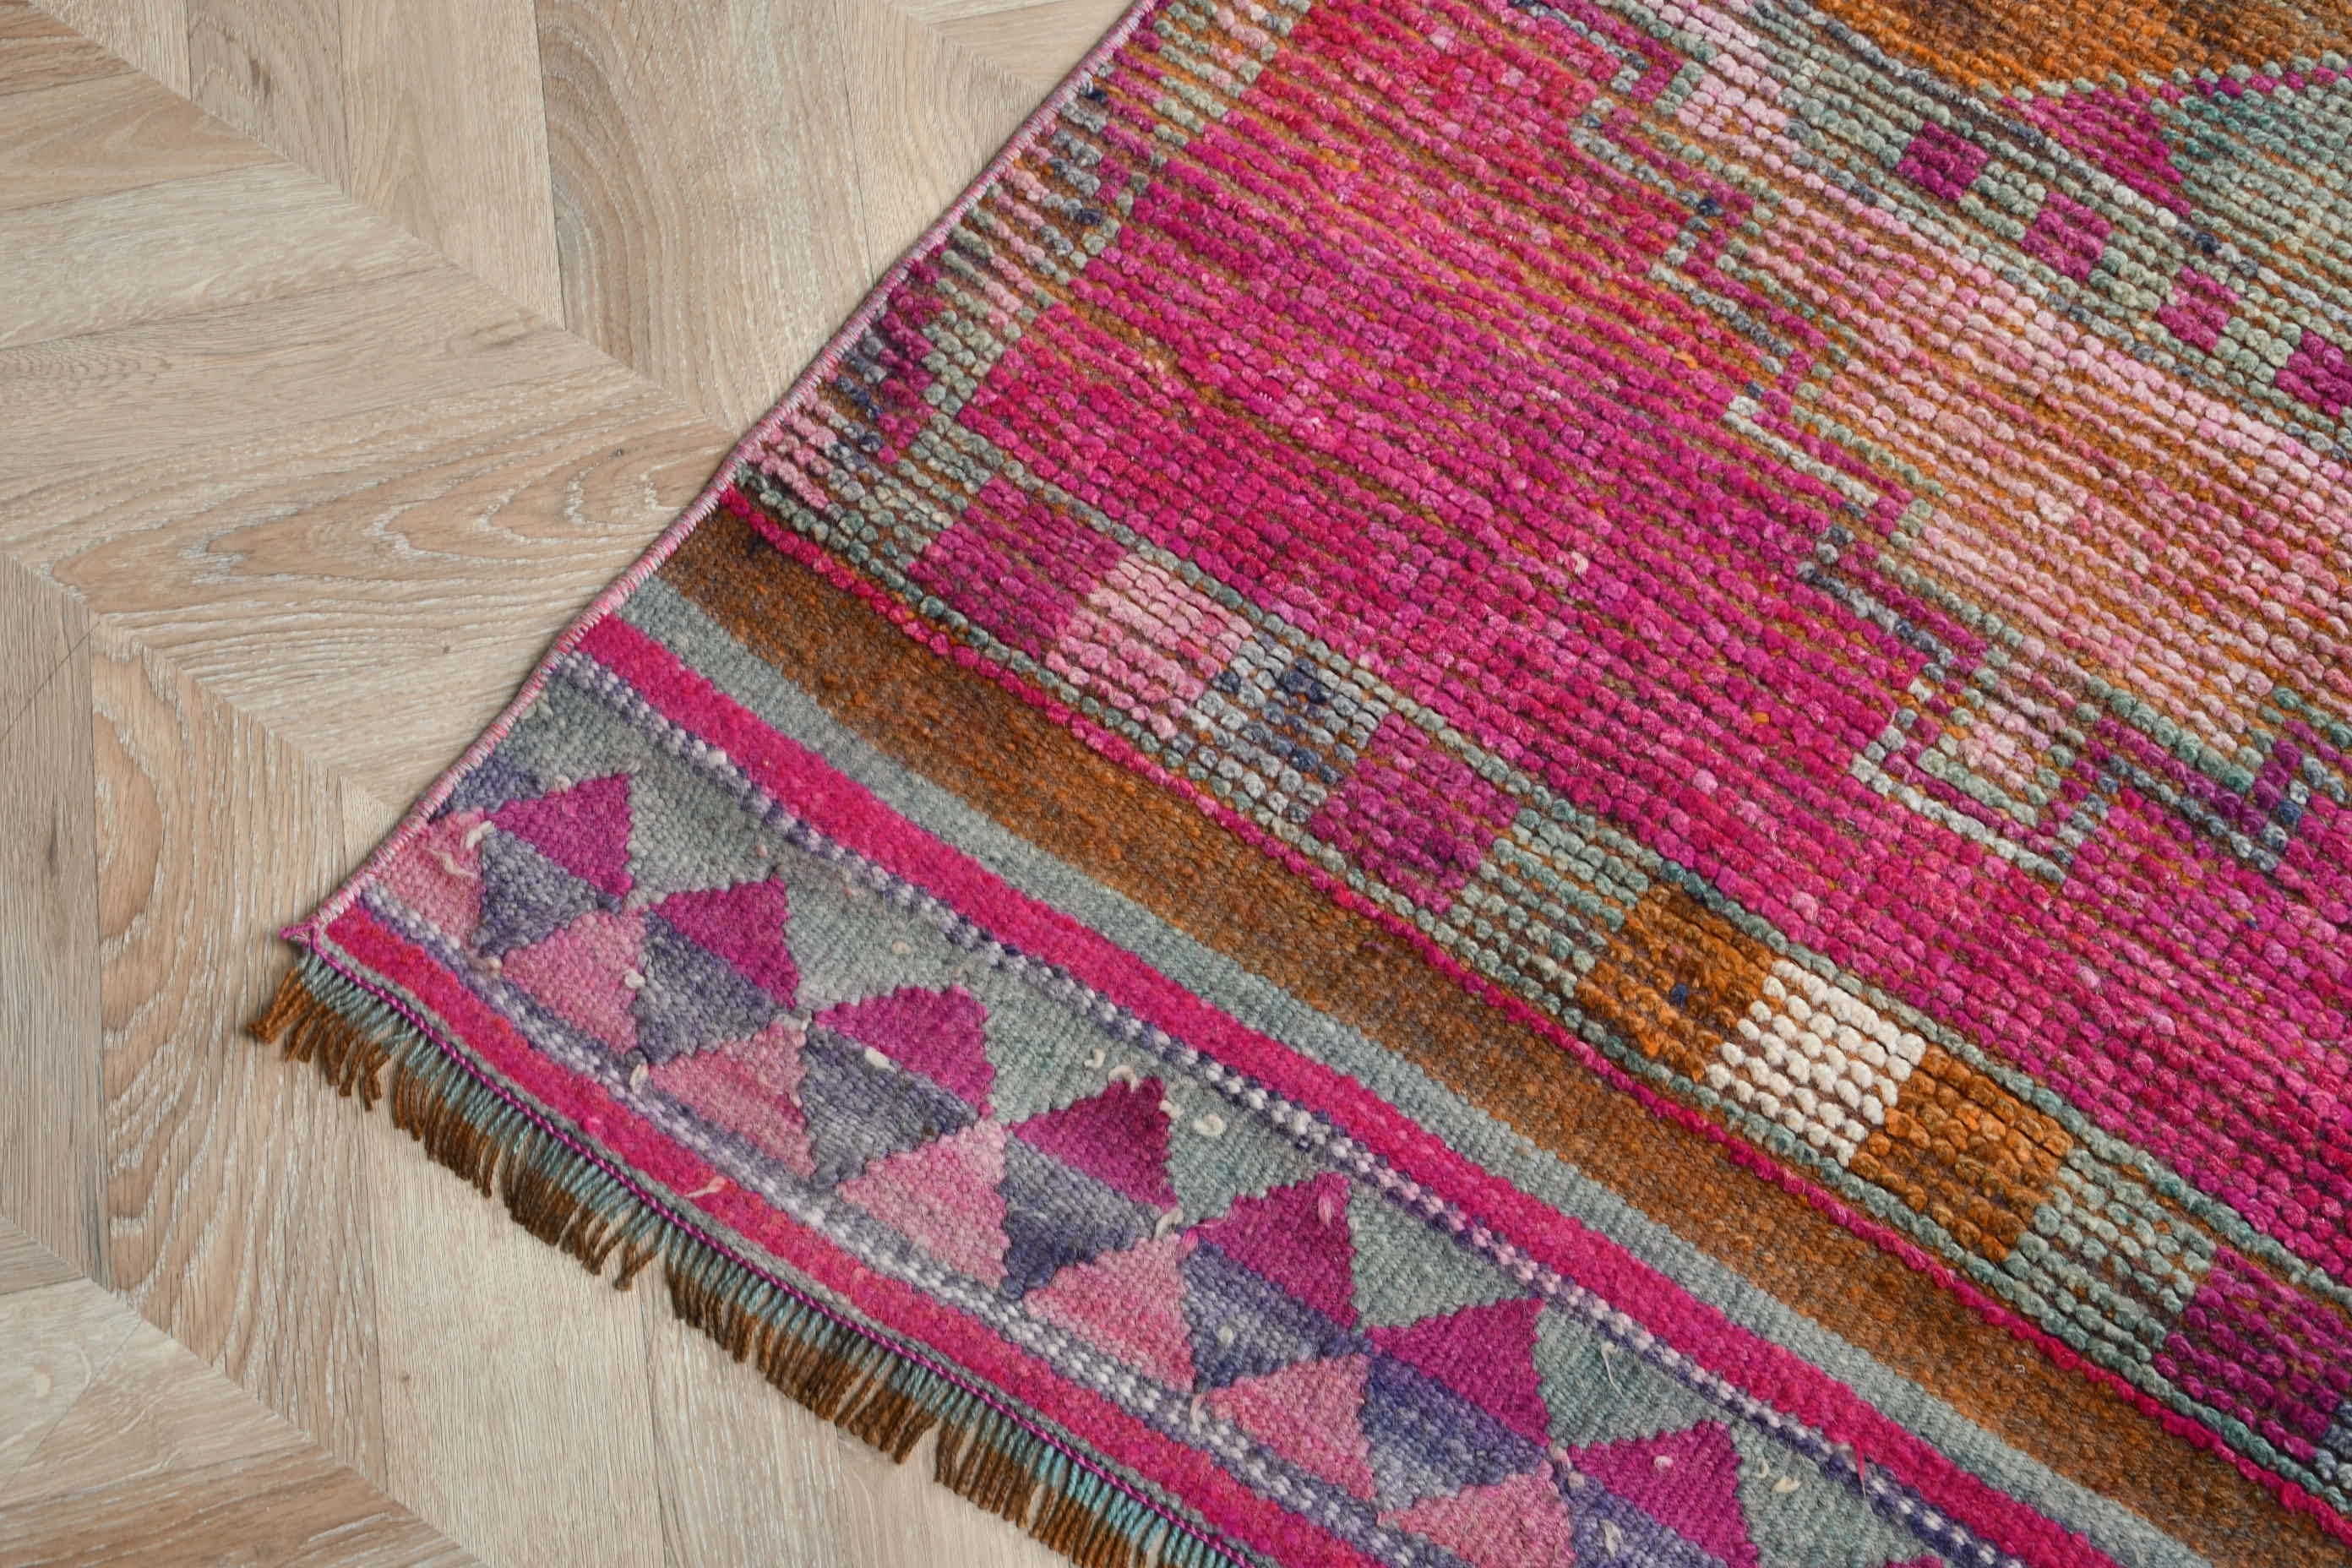 Floor Rug, Rugs for Kitchen, Turkish Rugs, Kitchen Rug, Pink  3x11.8 ft Runner Rug, Hallway Rugs, Vintage Rugs